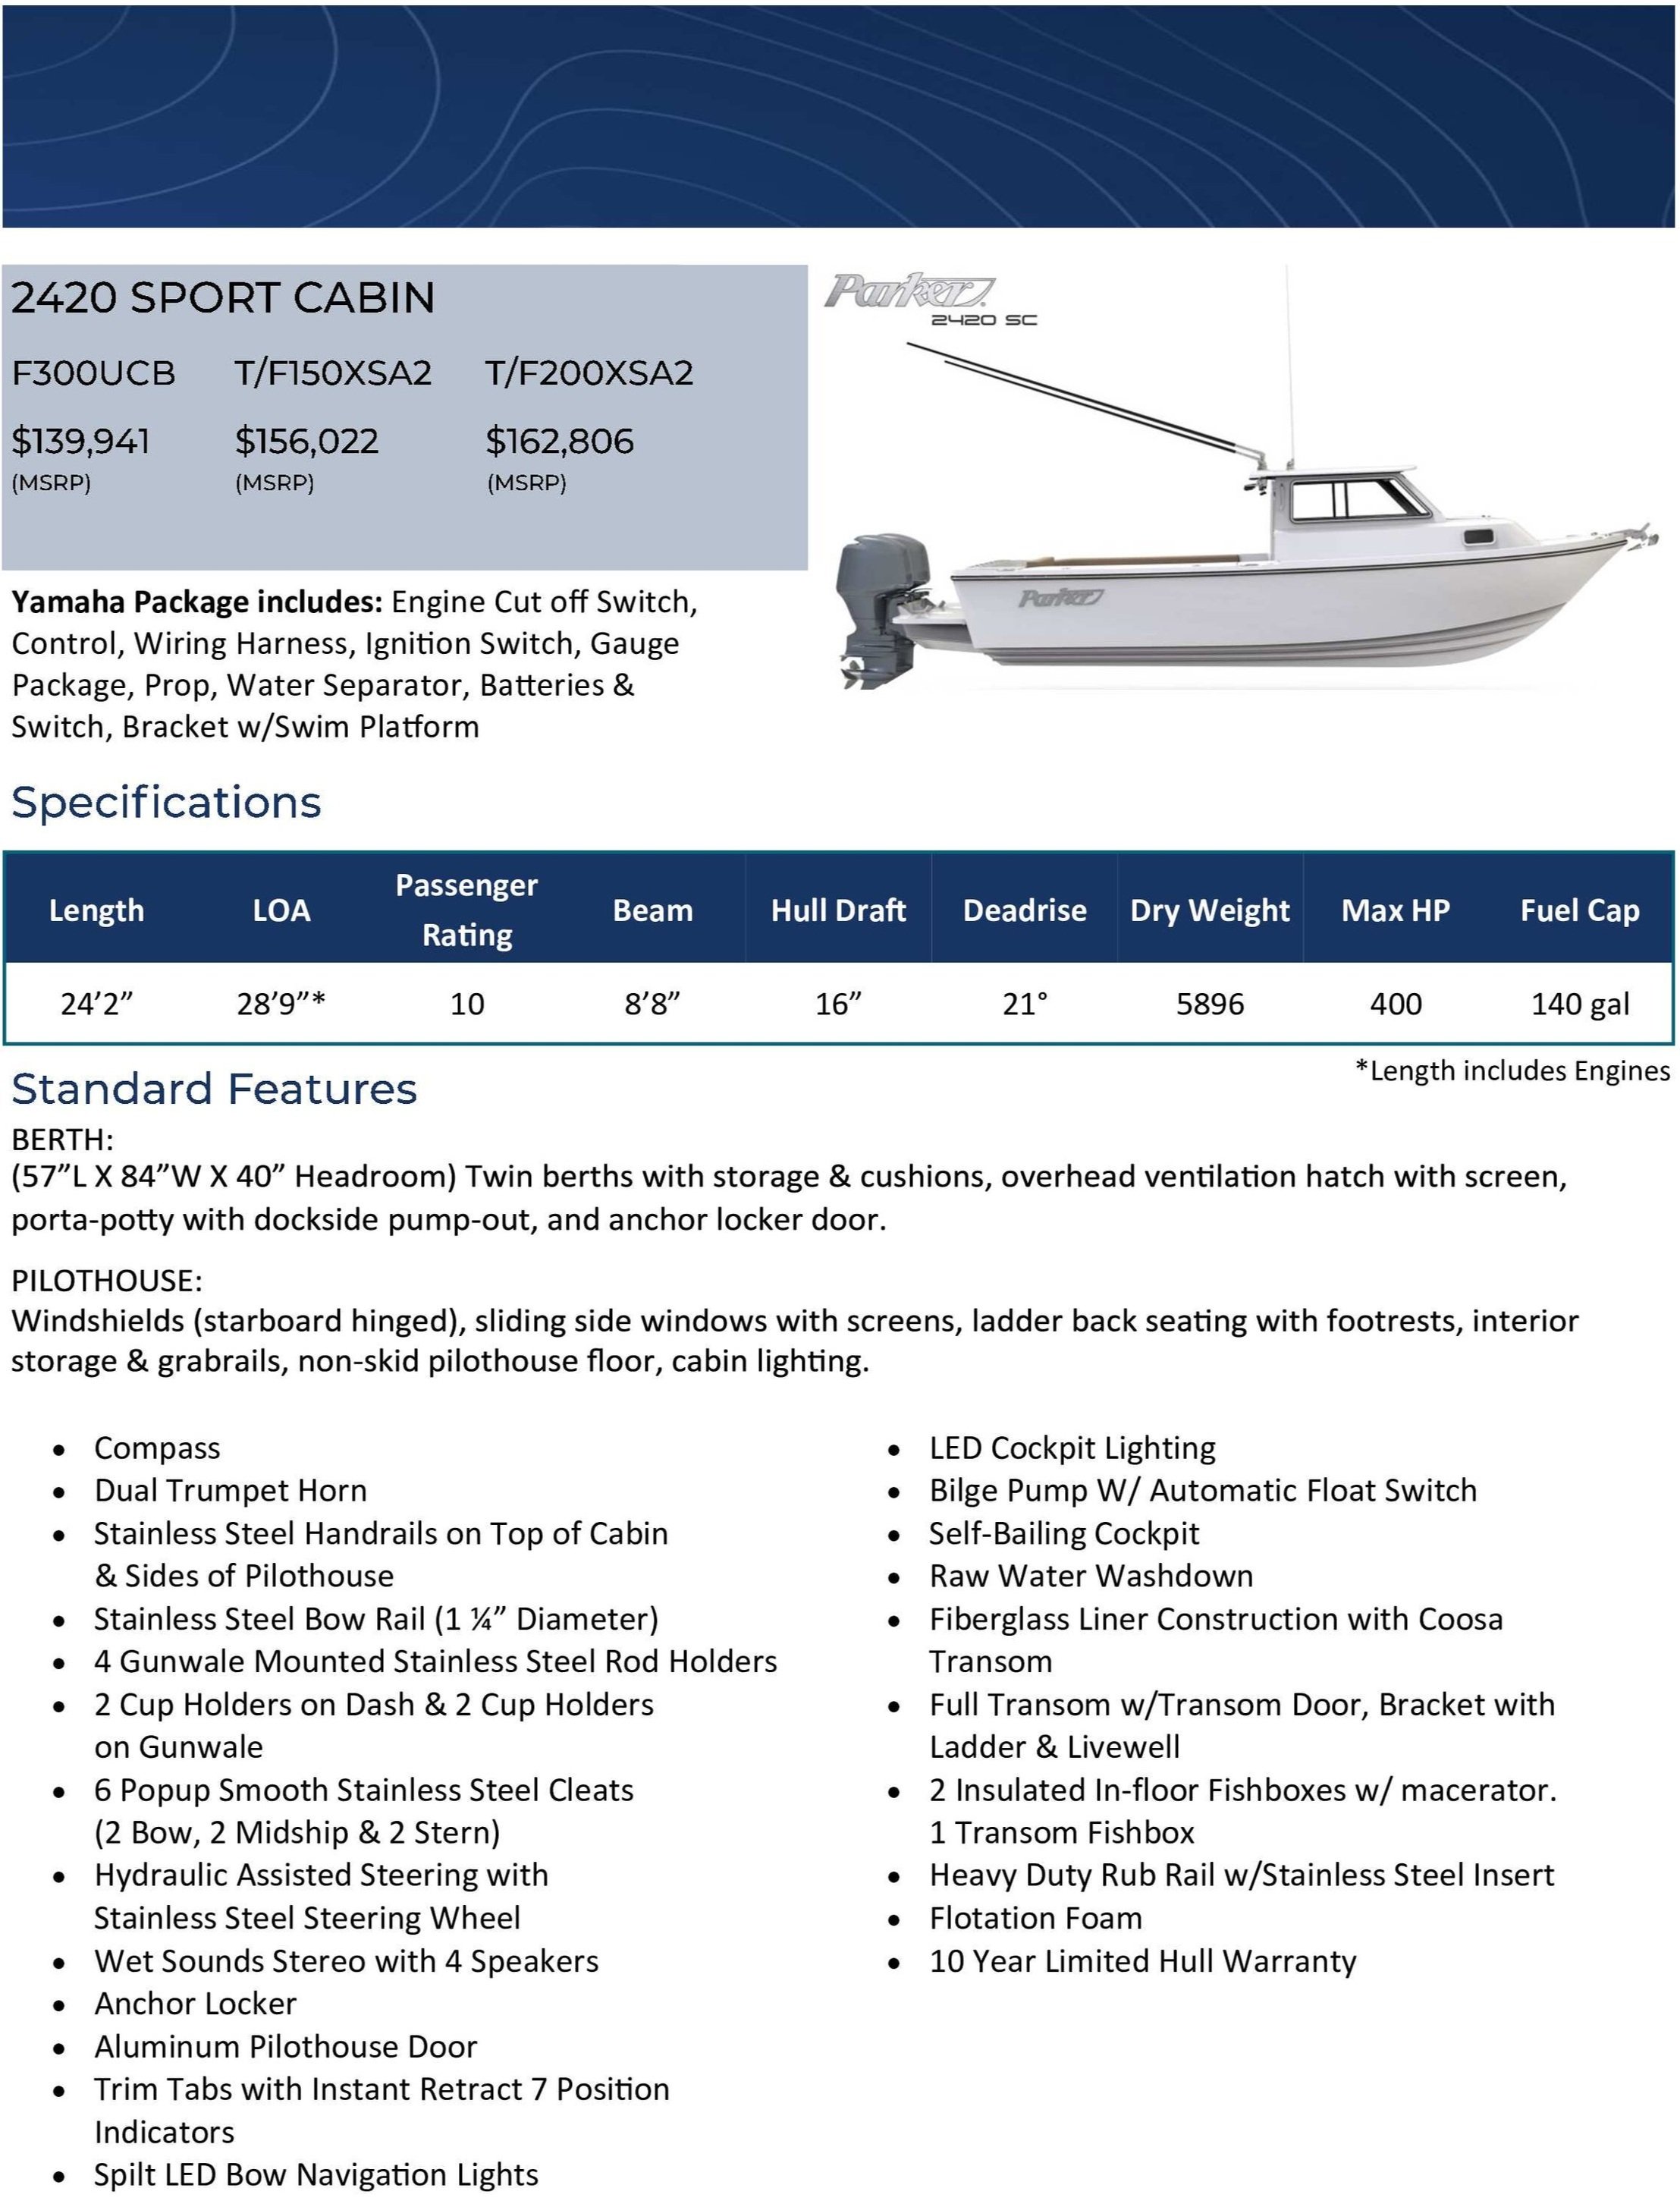 2420 Sport Cabin - Parker Boats